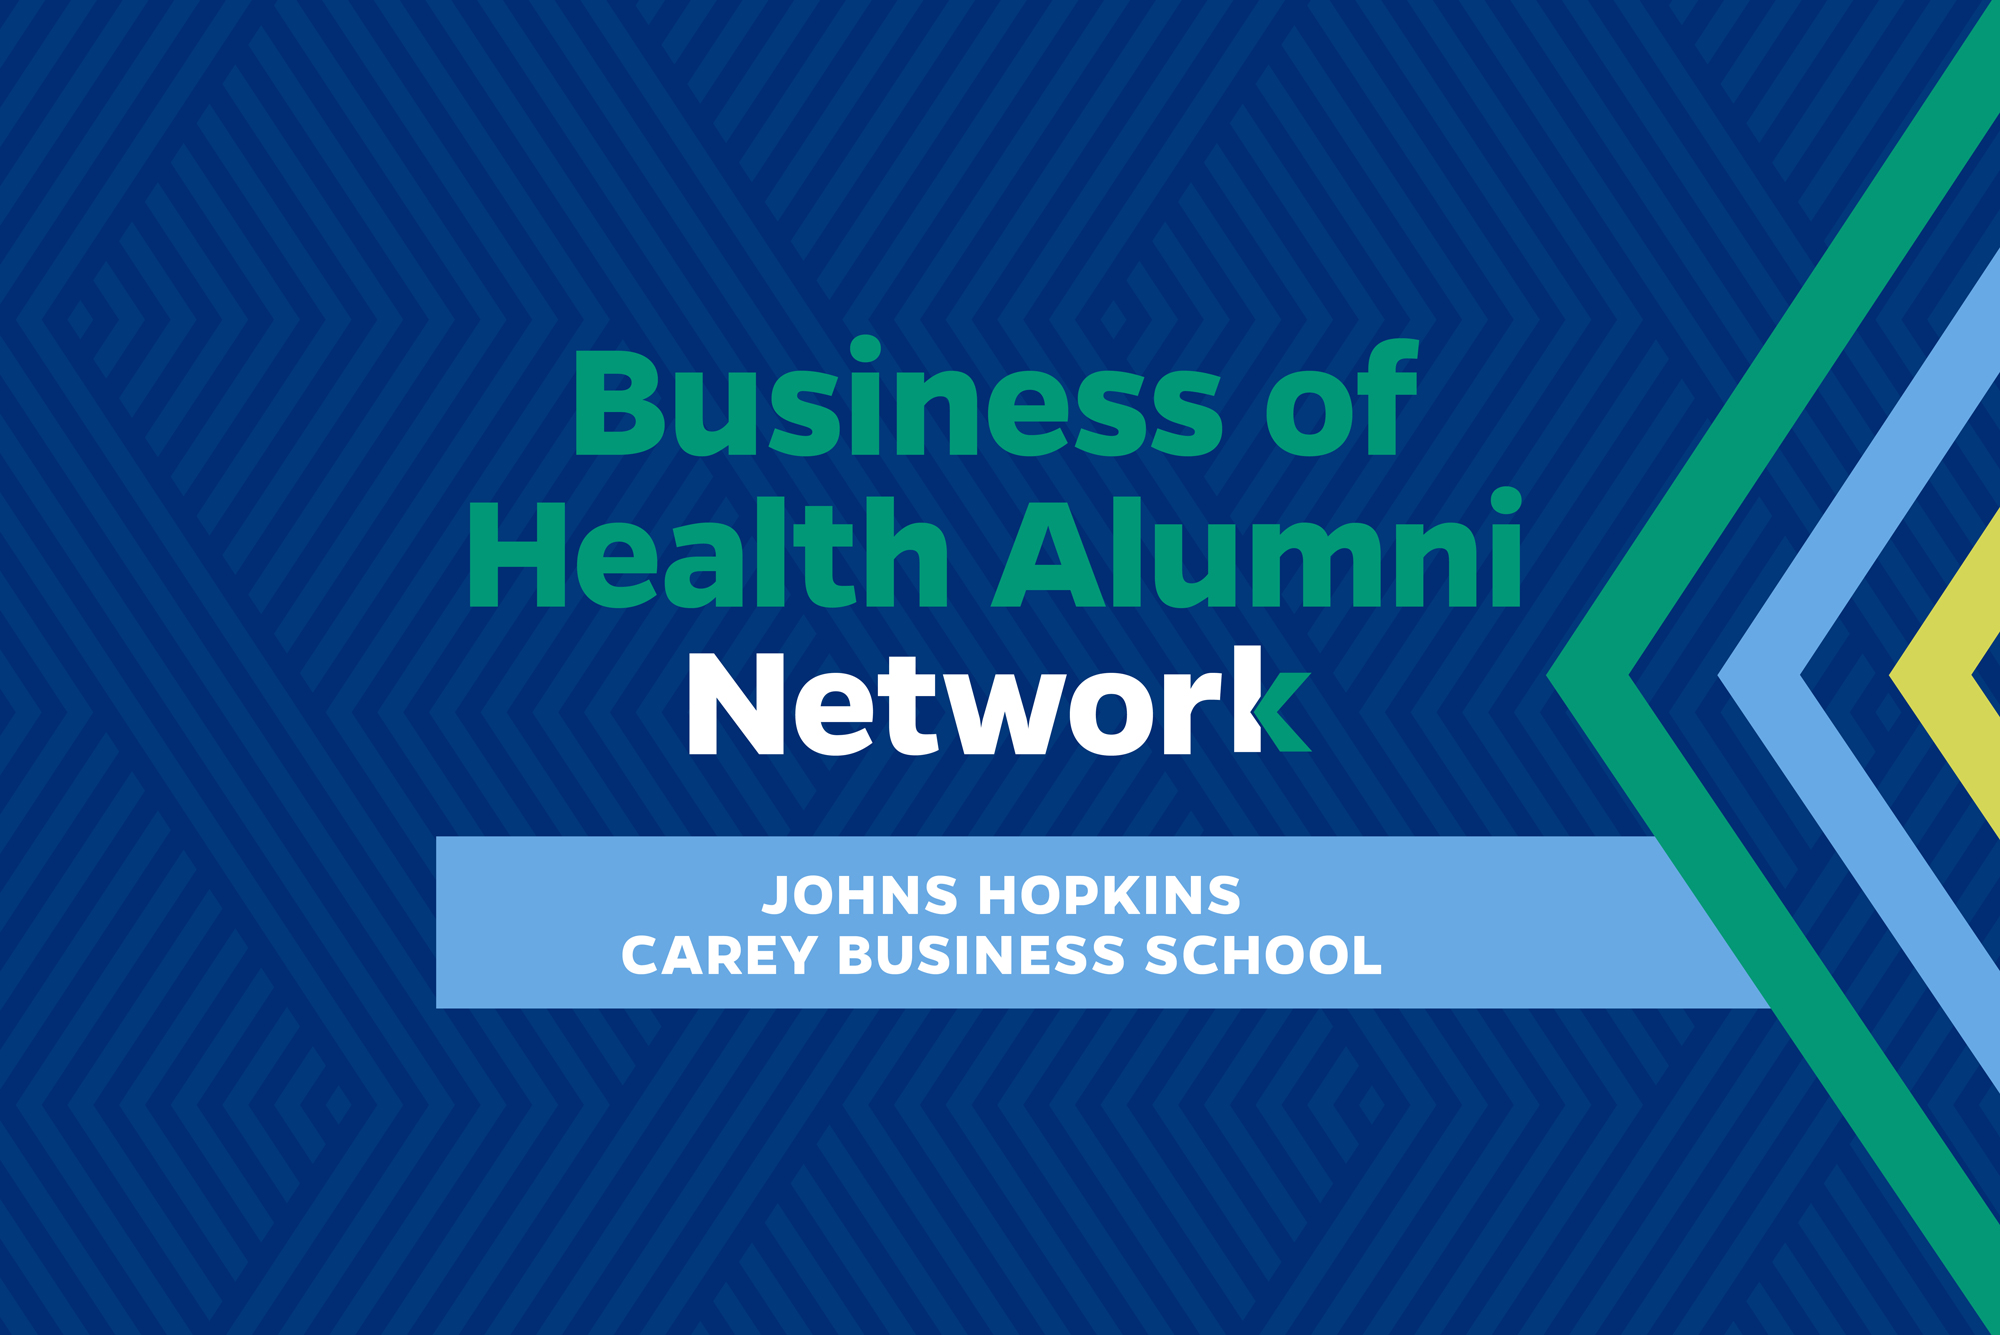 Carey Business School: Business of Health Alumni Network Launch